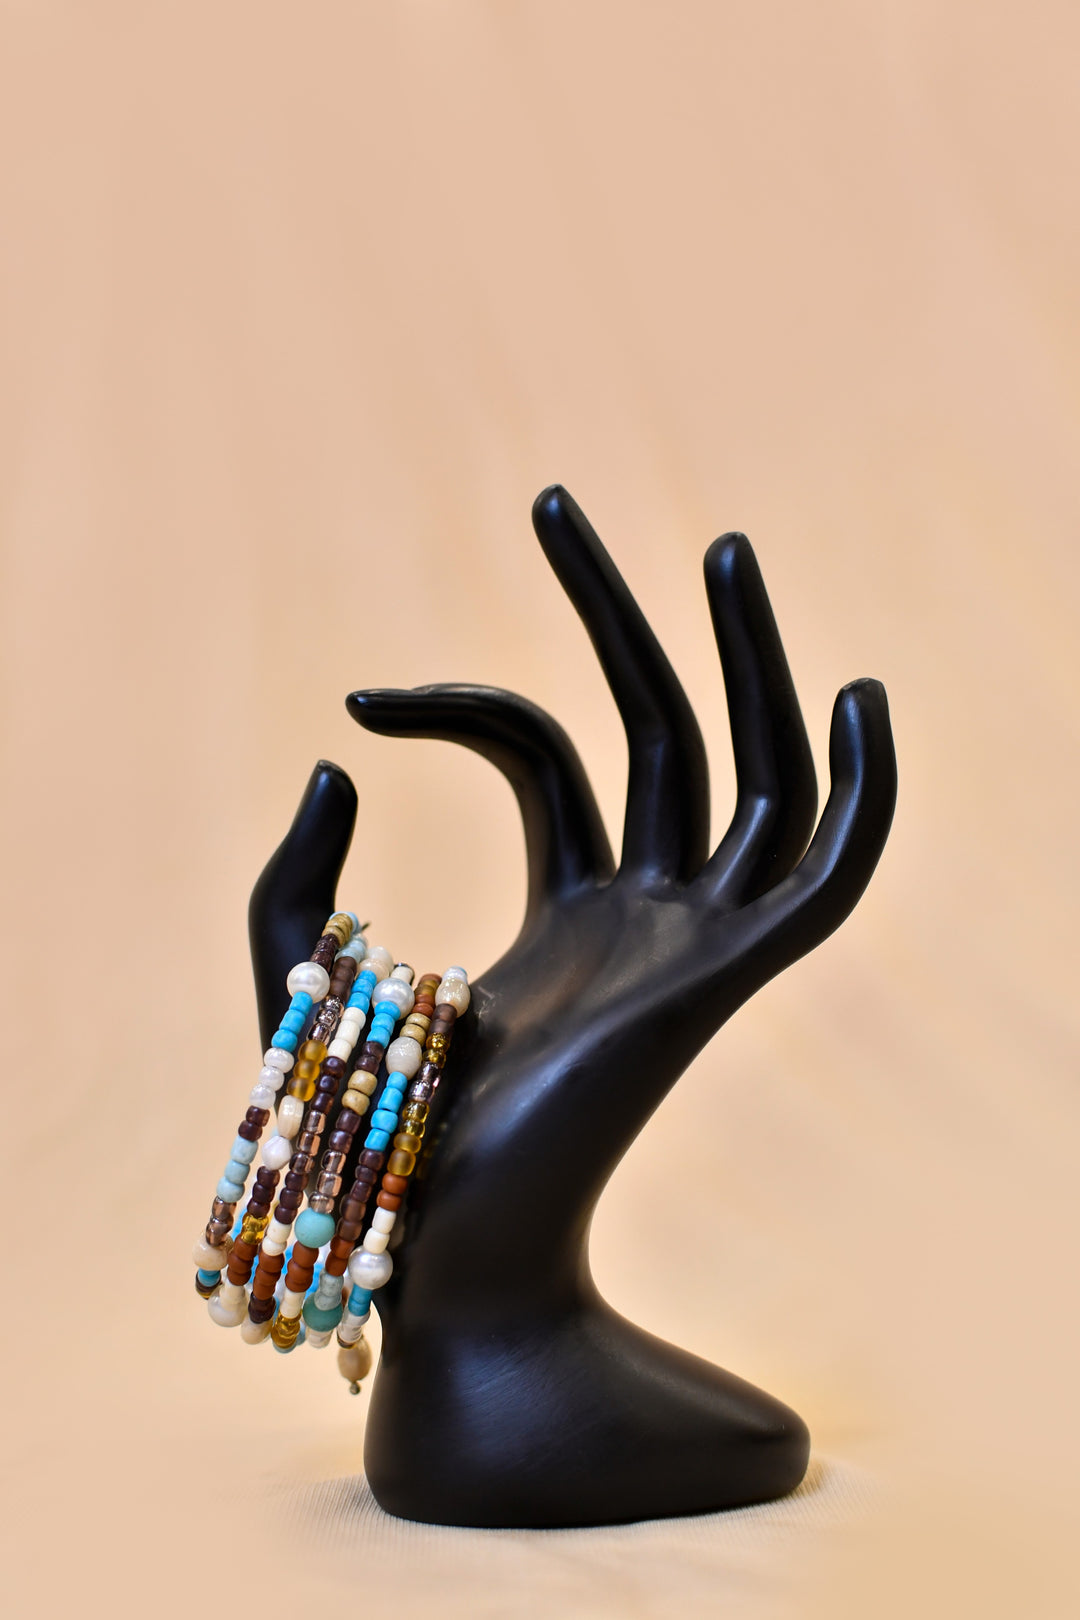 Seed Beads & Glass Pearl Beads Bracelet